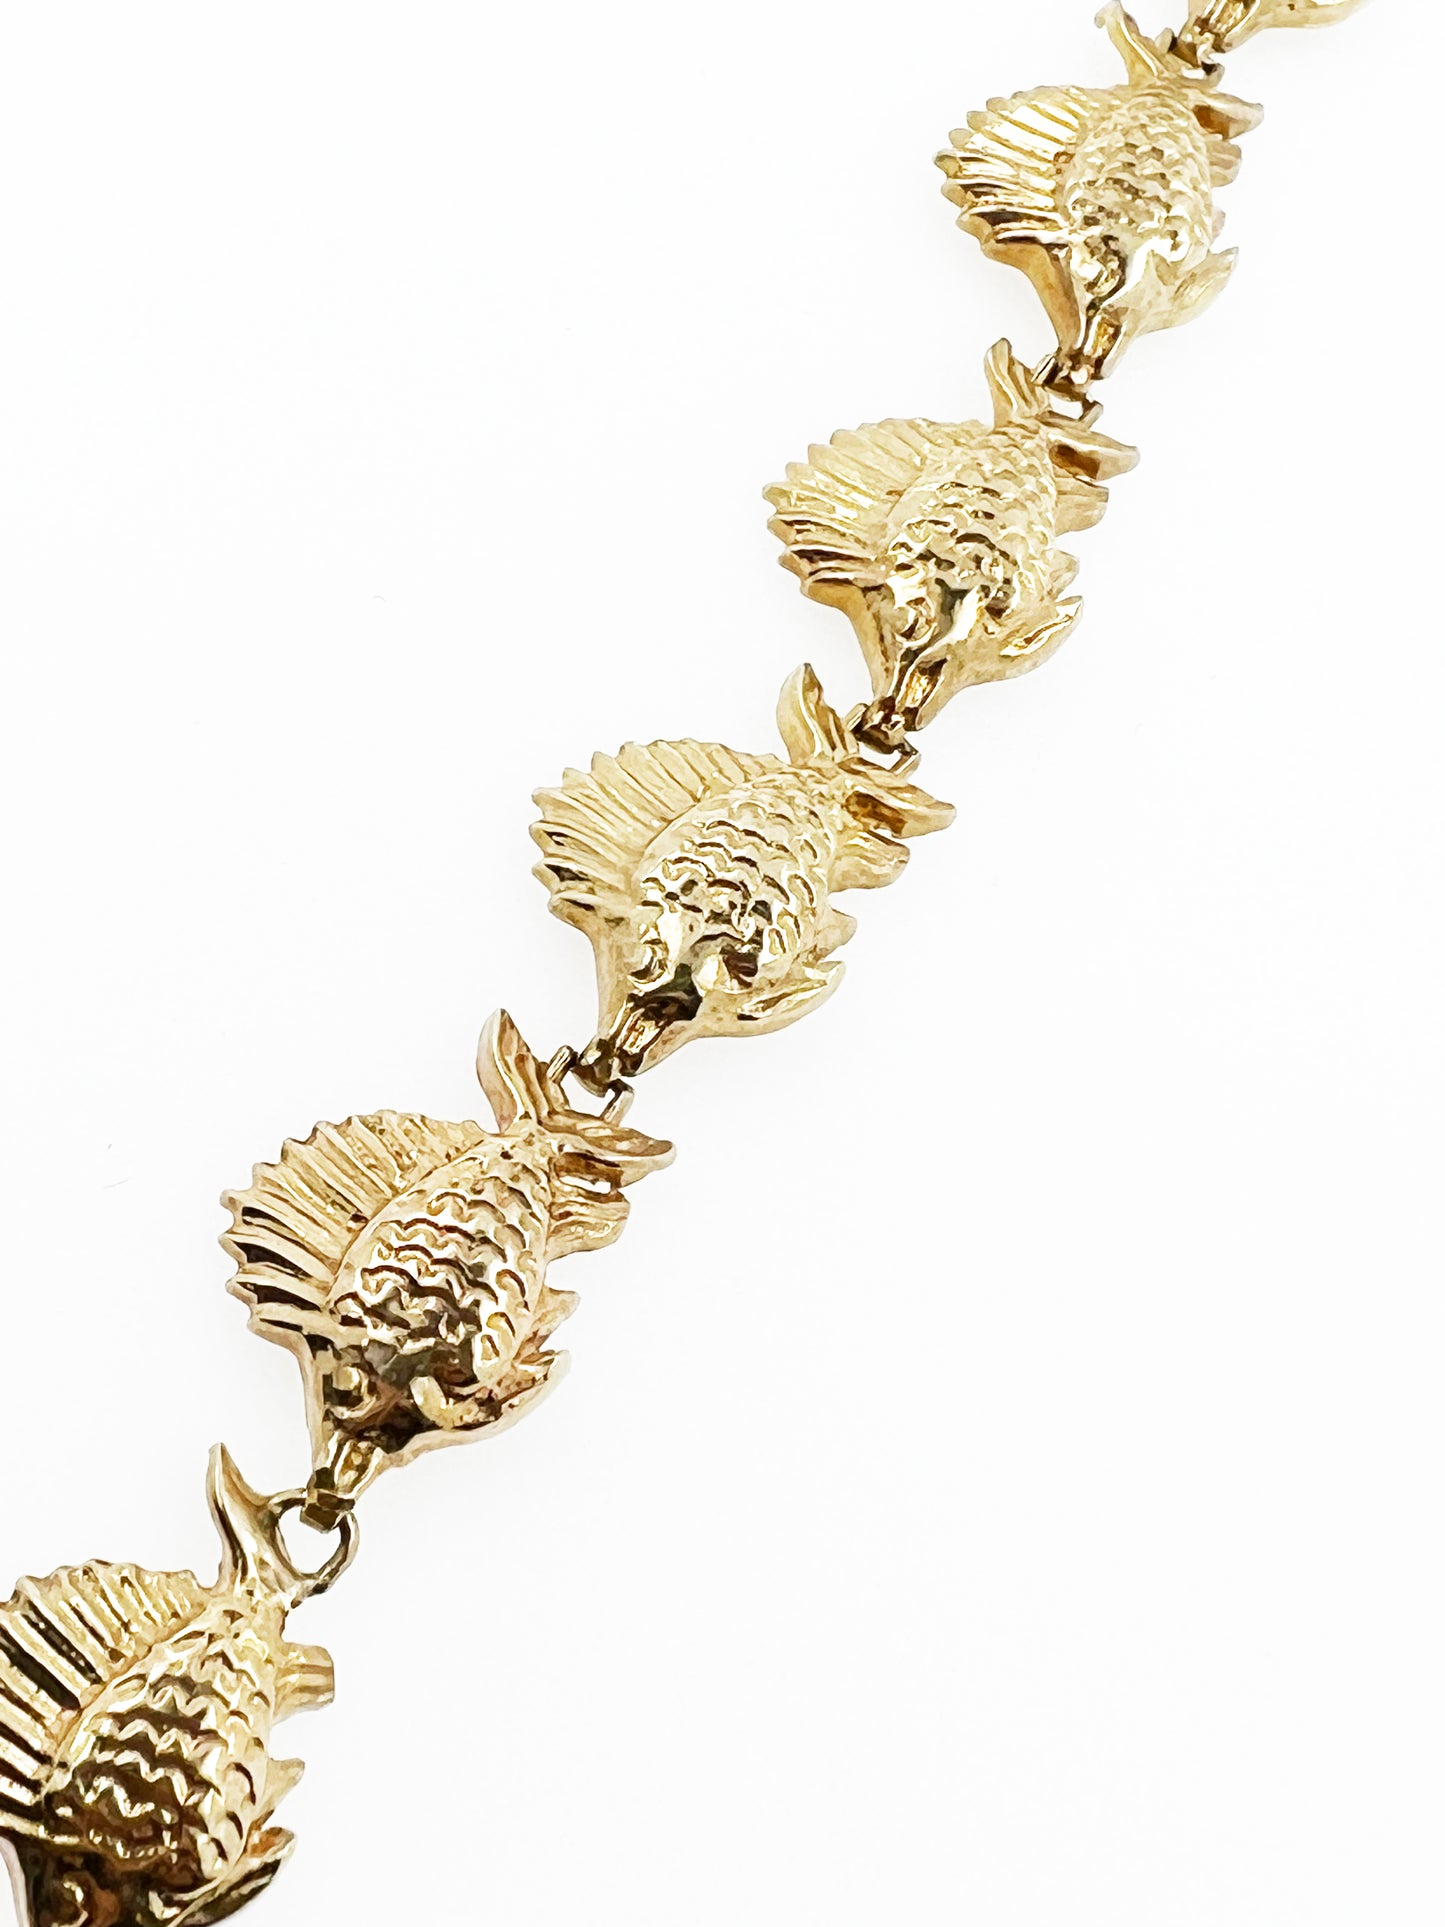 Spiny Dorsal Fin Fish Bracelet in 14k Yellow Gold